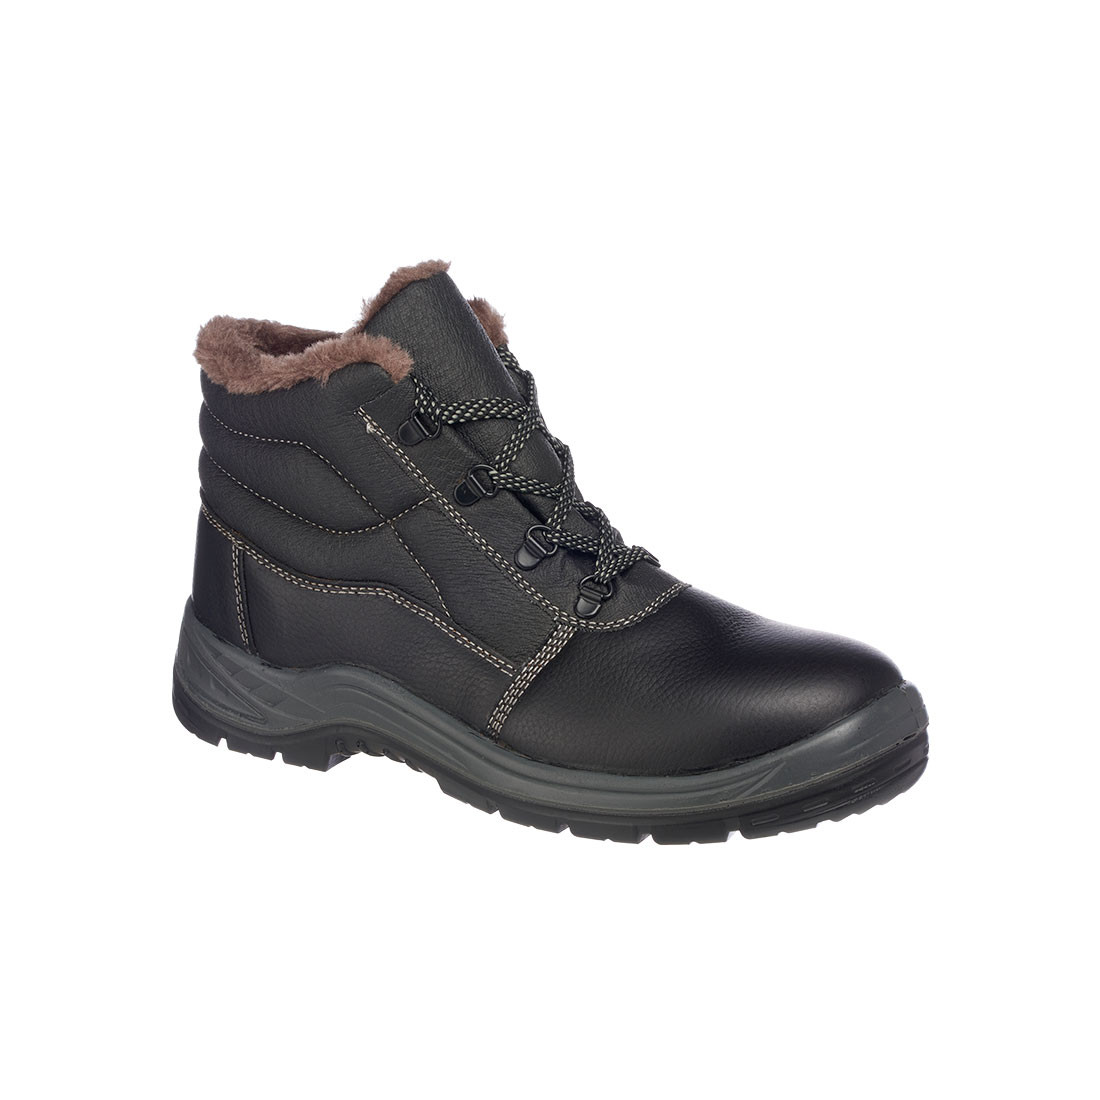 Steelite Kumo Fur lined Boot S3 - Footwear